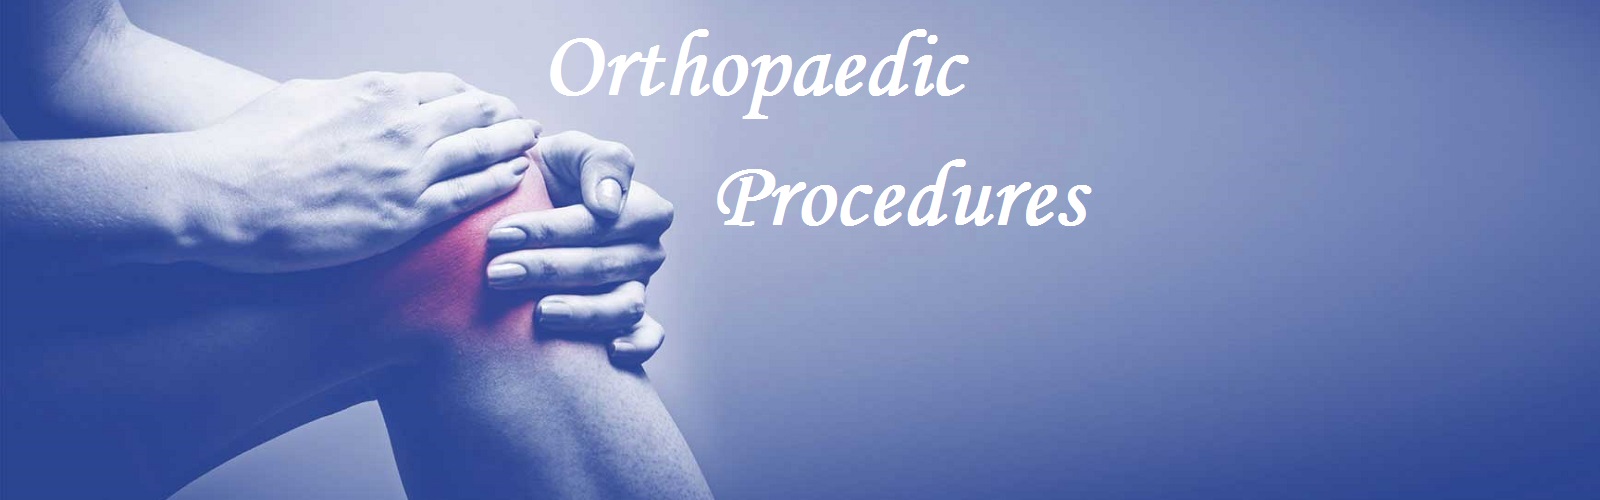 Orthopaedic Procedures